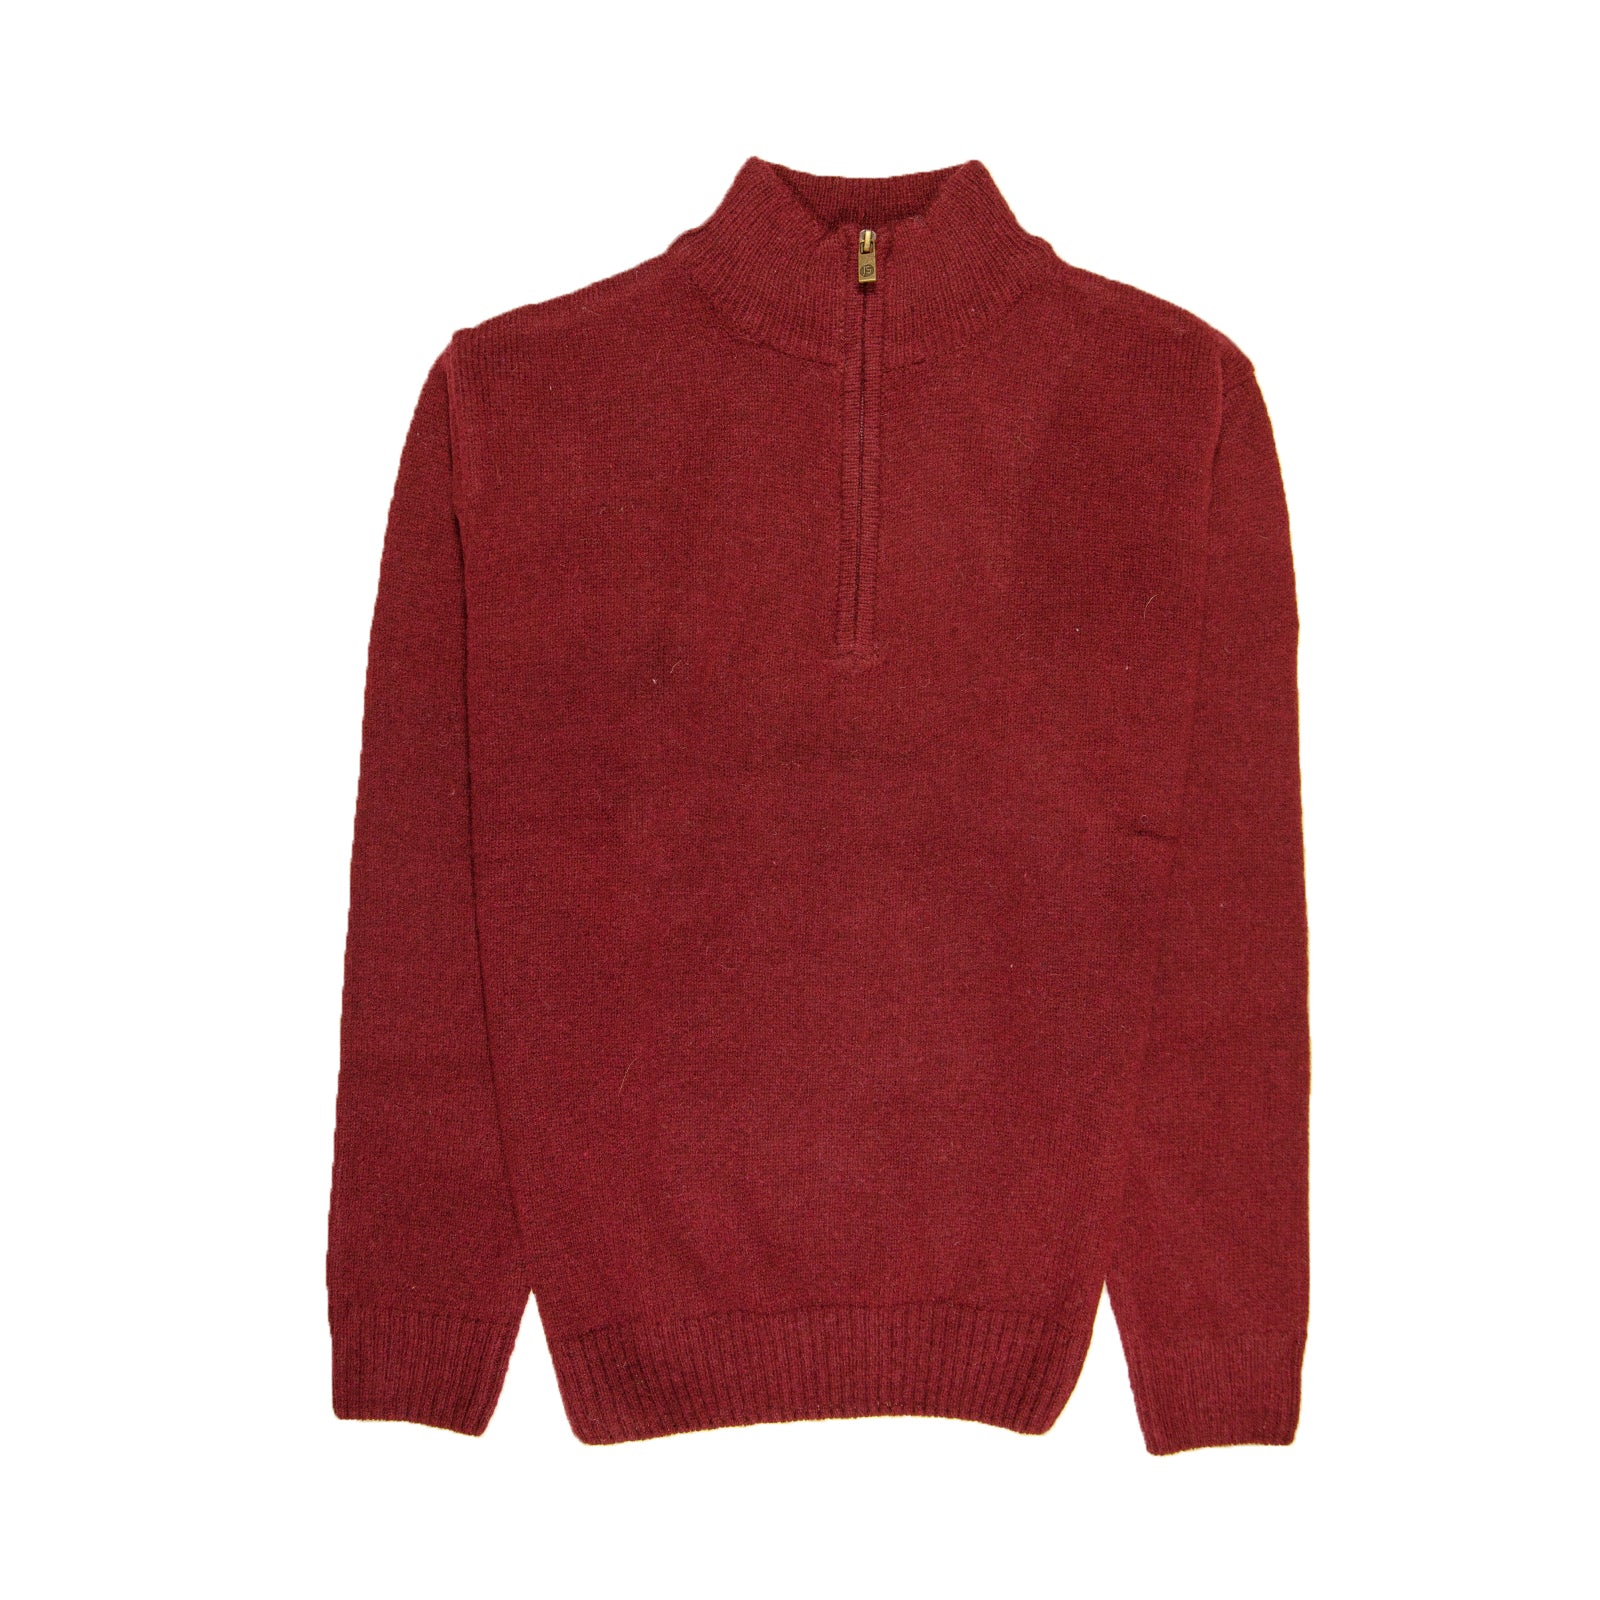 100% SHETLAND WOOL Half Zip Up Knit JUMPER Pullover Mens Sweater Knitted - Burgundy (97) - XL